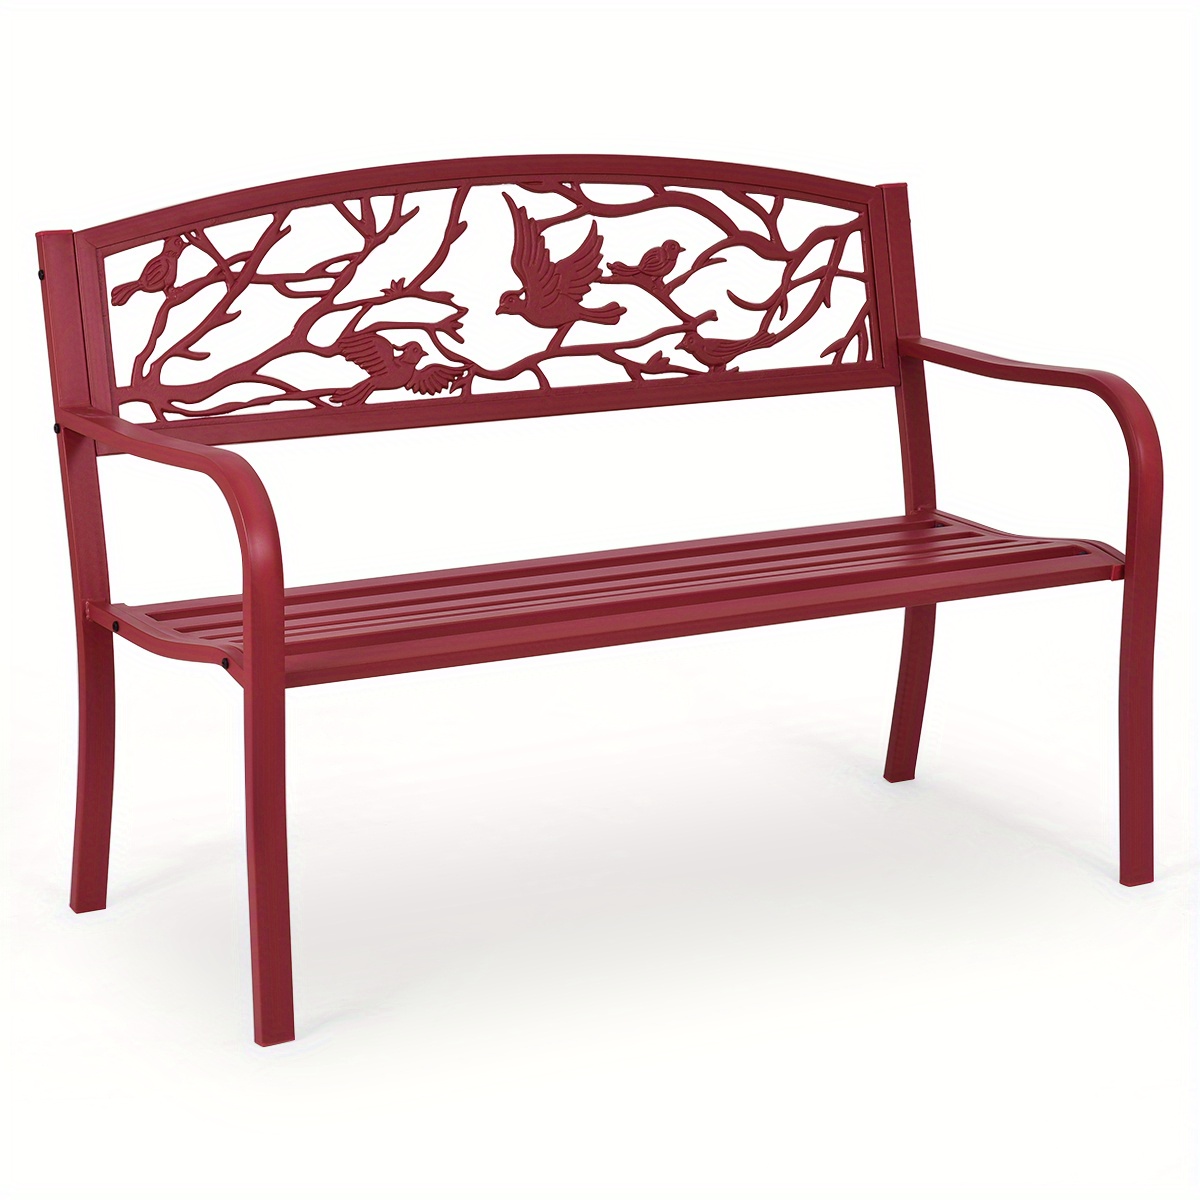 

Lifezeal Patio Garden Bench Park Yard Outdoor Furniture Cast Iron Porch Chair Red